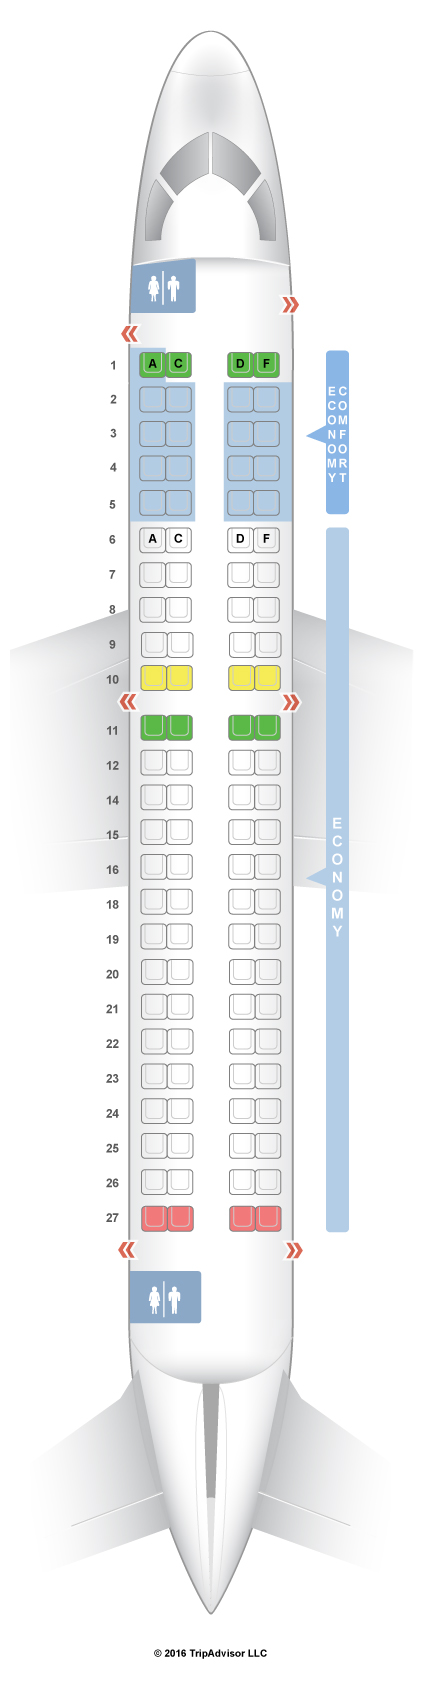 Alitalia Seating Chart